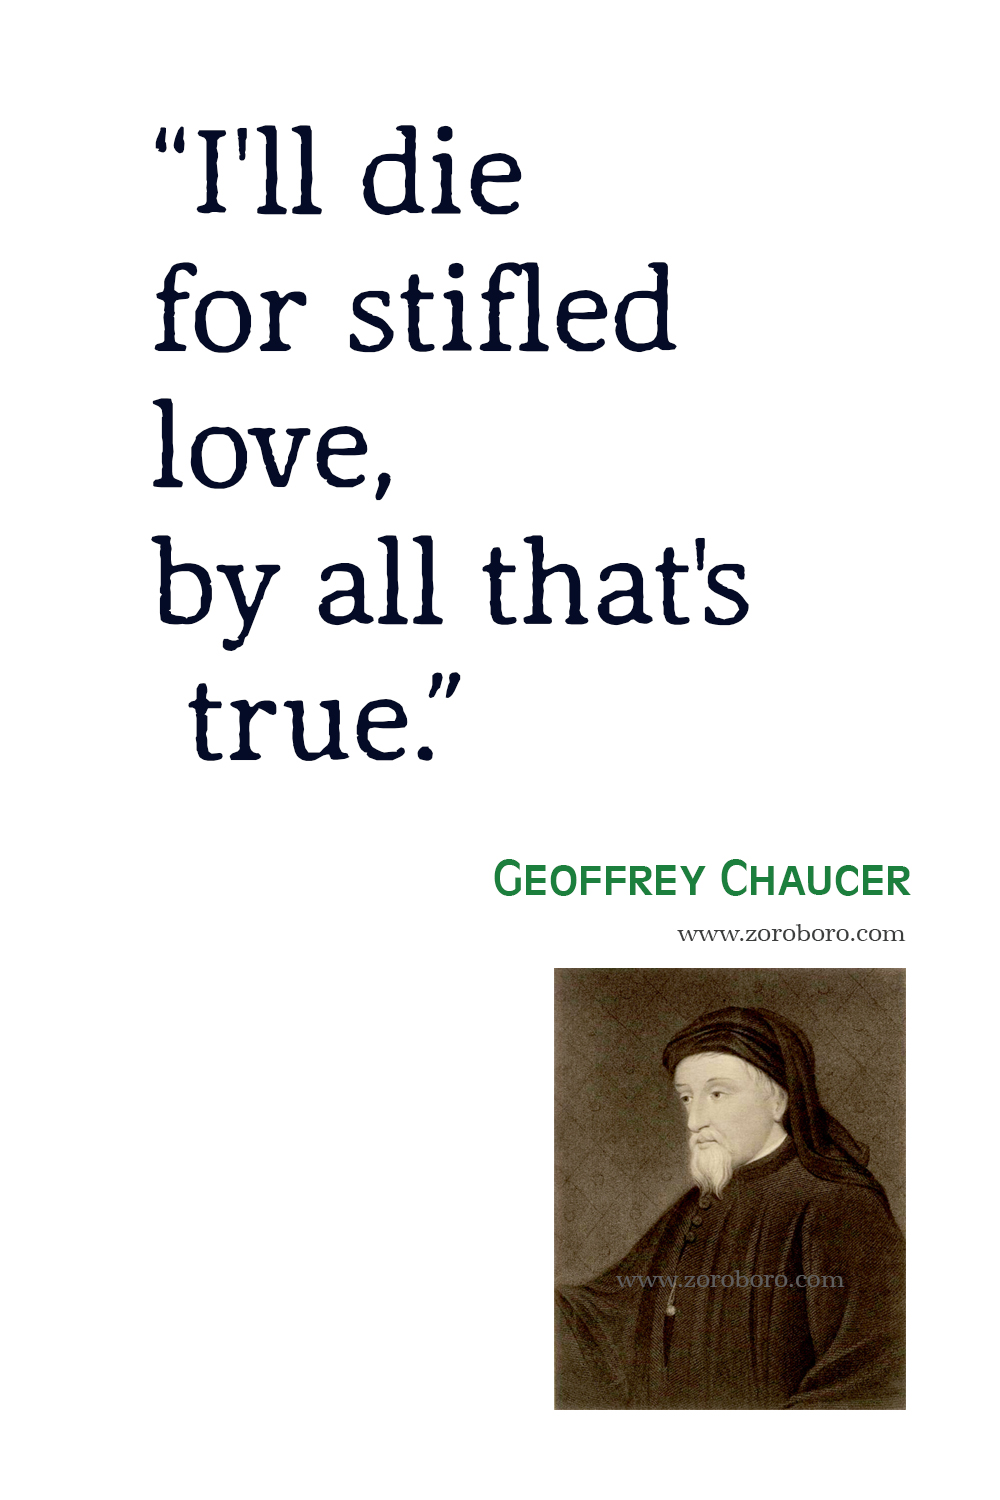 Geoffrey Chaucer Quotes, Geoffrey Chaucer Poems, Geoffrey Chaucer Poet, Geoffrey Chaucer The Canterbury Tales Quotes, Geoffrey Chaucer Books.